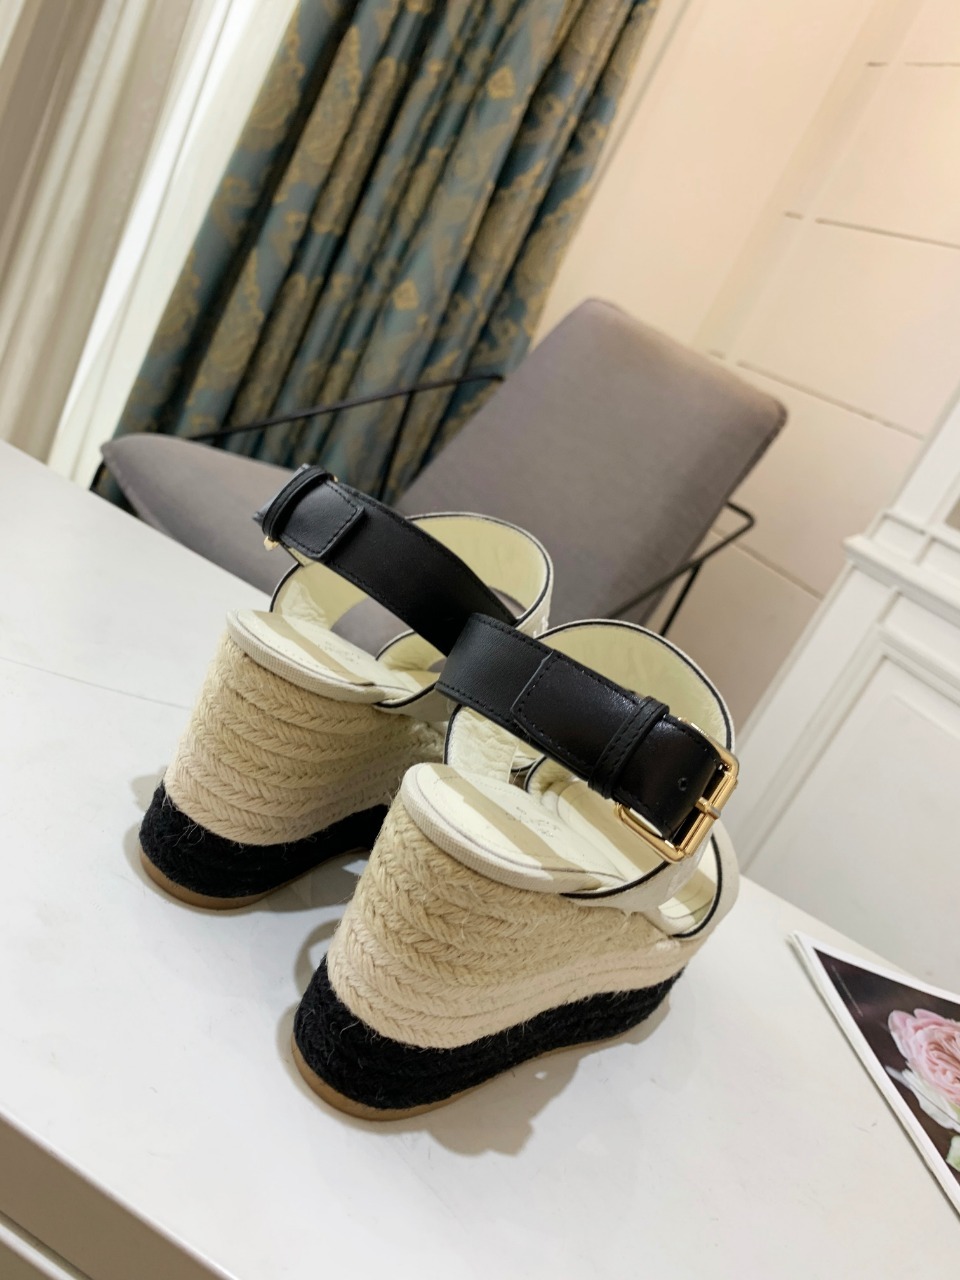 LOUISVuitton最新走秀款厚底凉鞋香港原版购入一比一开模今年的款式比去年增加了老花原素显得更为大